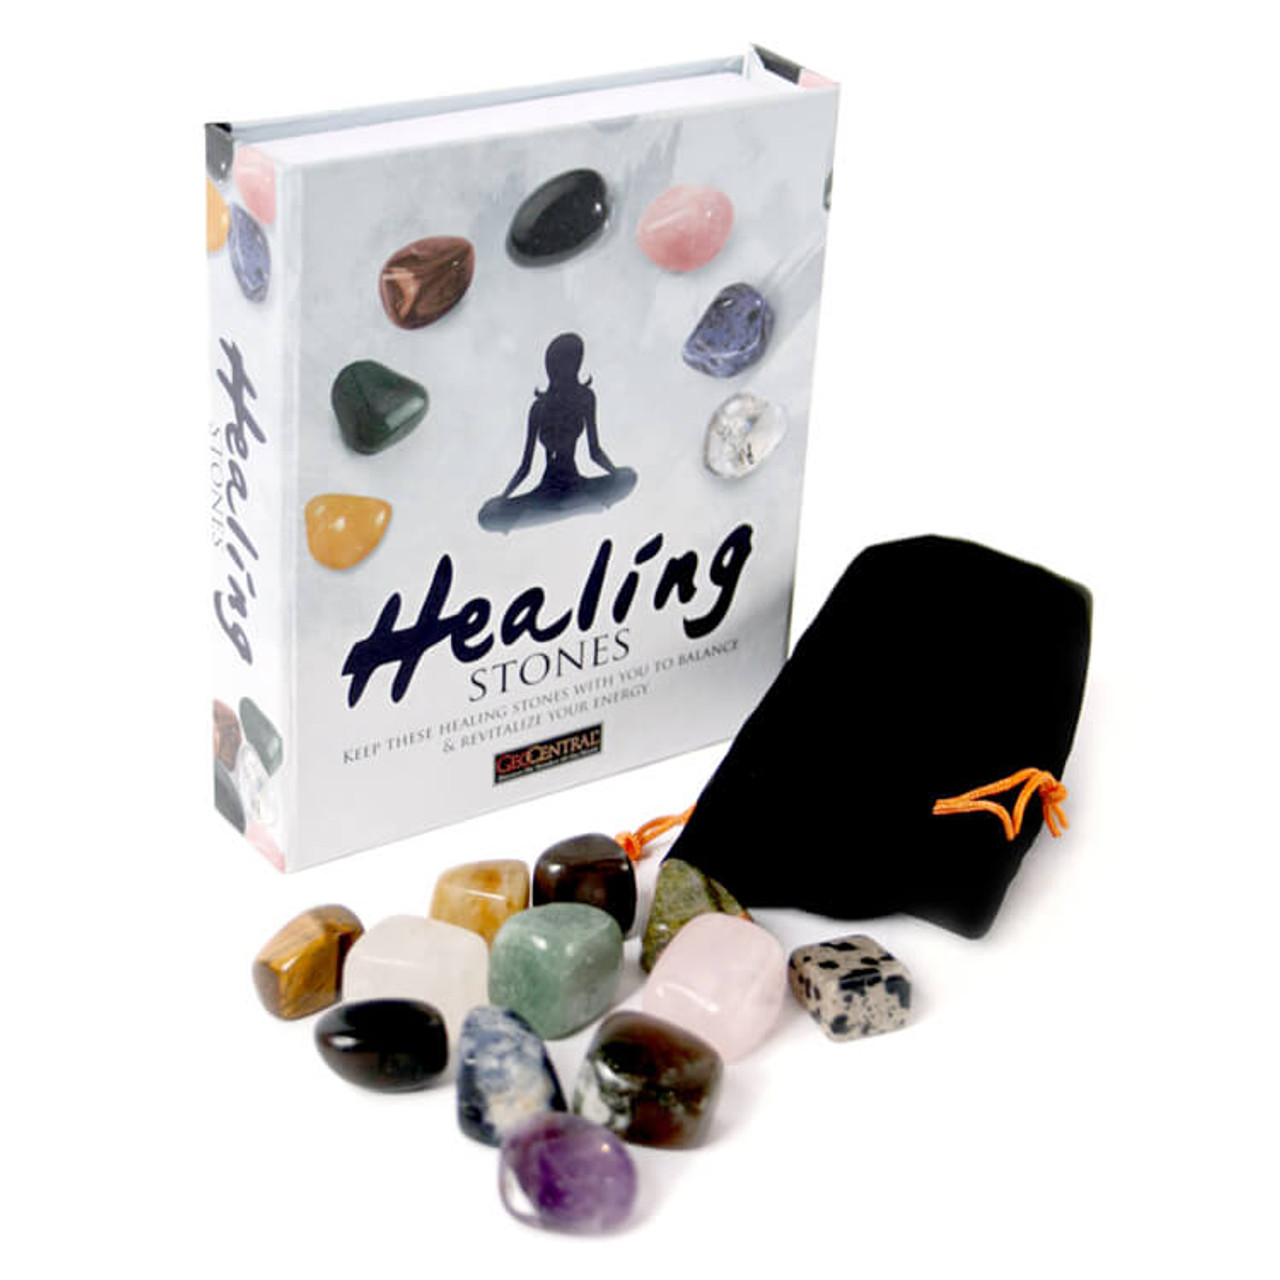 Healing Stones in Mystical Healing Gifts